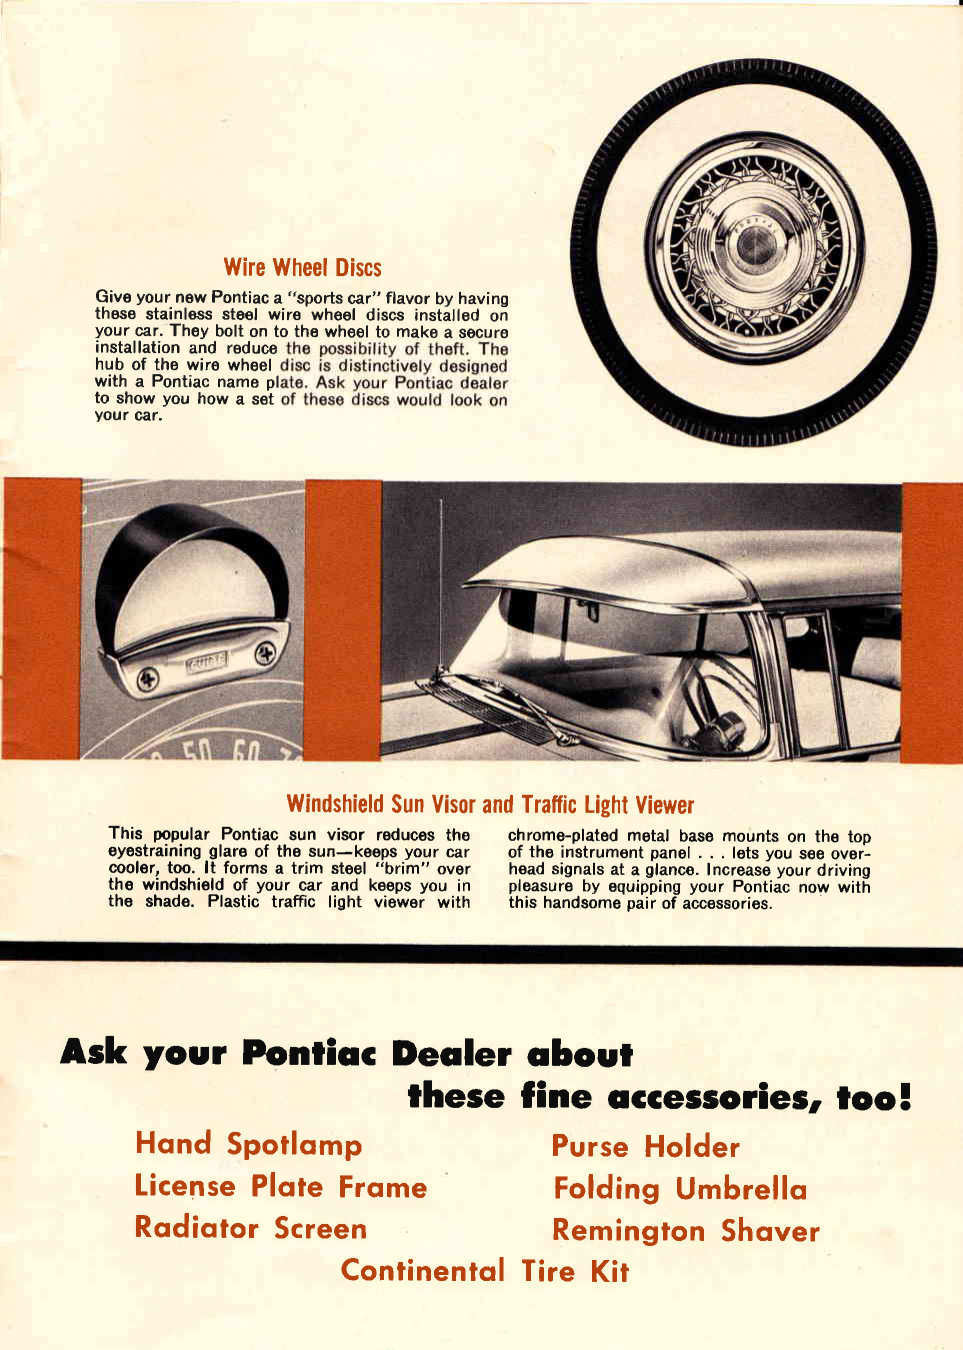 1955_Pontiac_Accessories-15